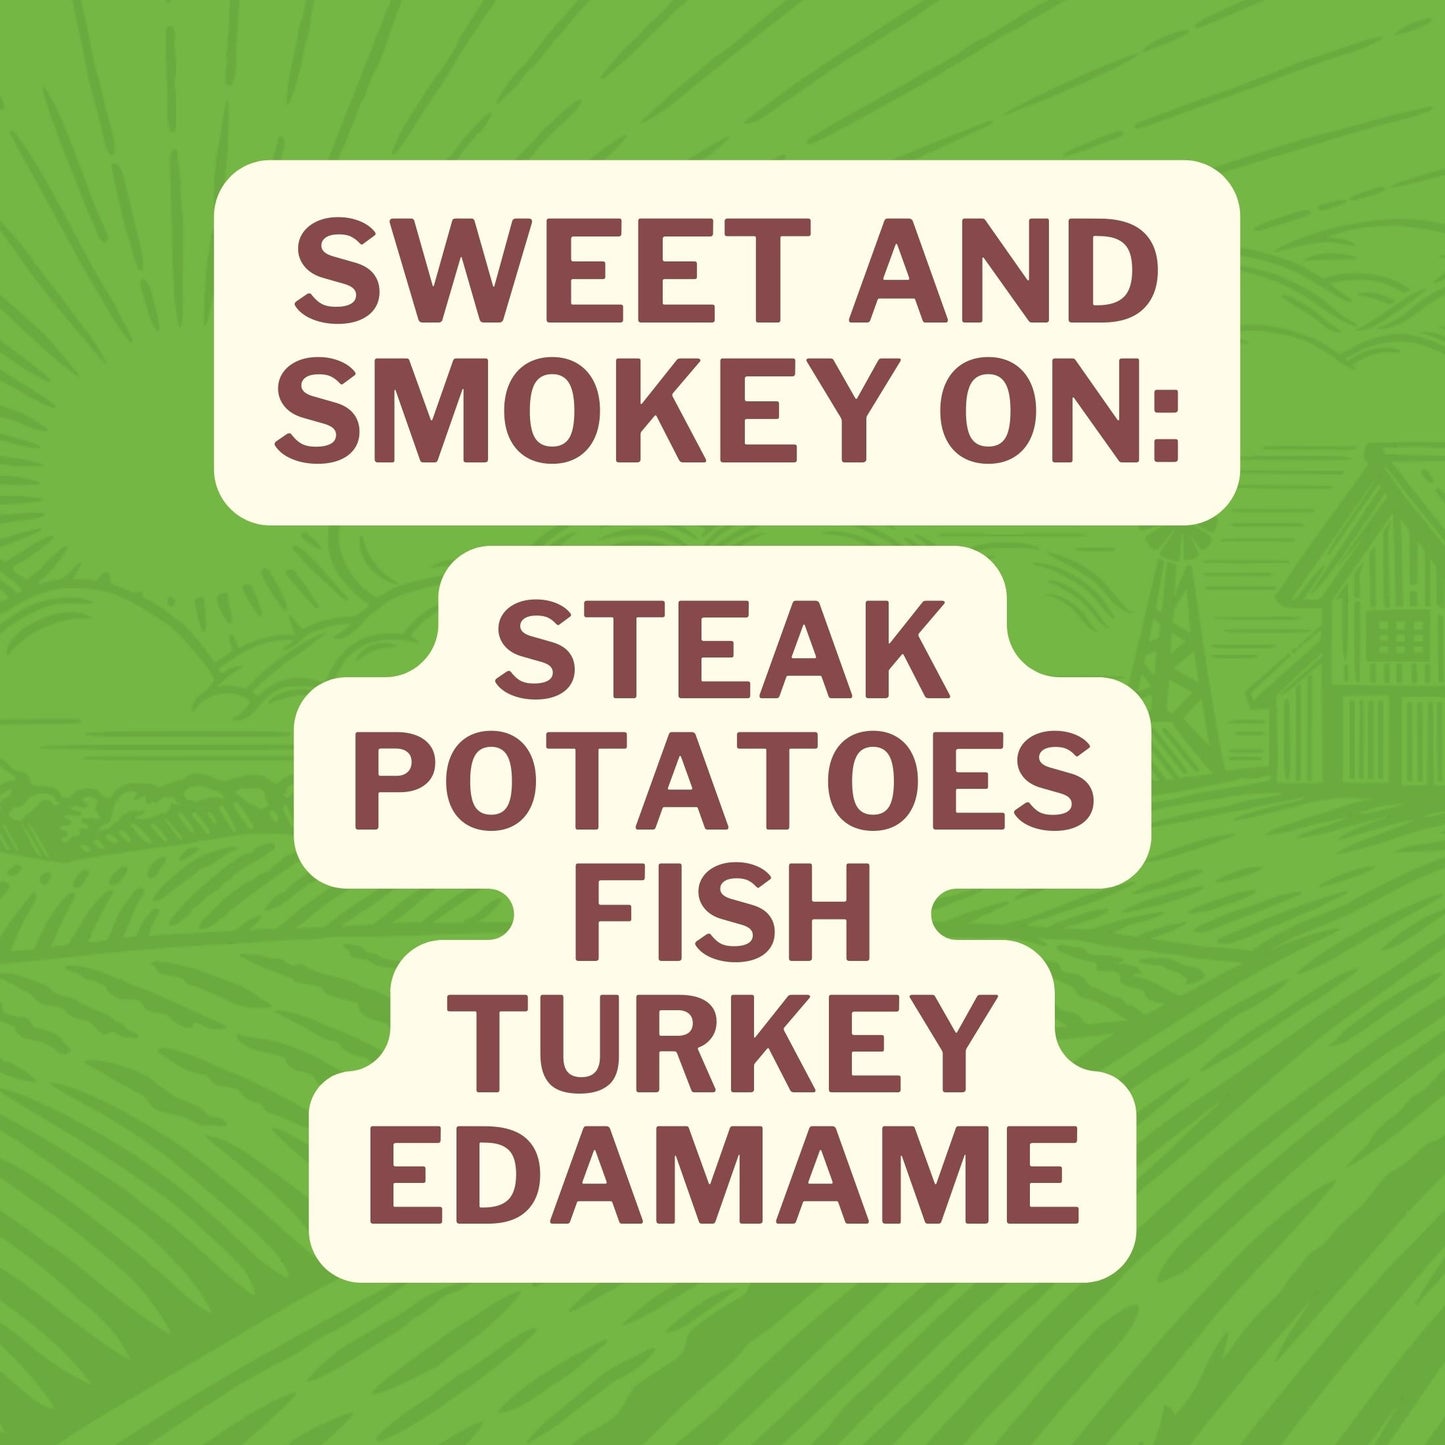 Splendidly Savory On: Steak Potoatoes Fish Turkey Edamame